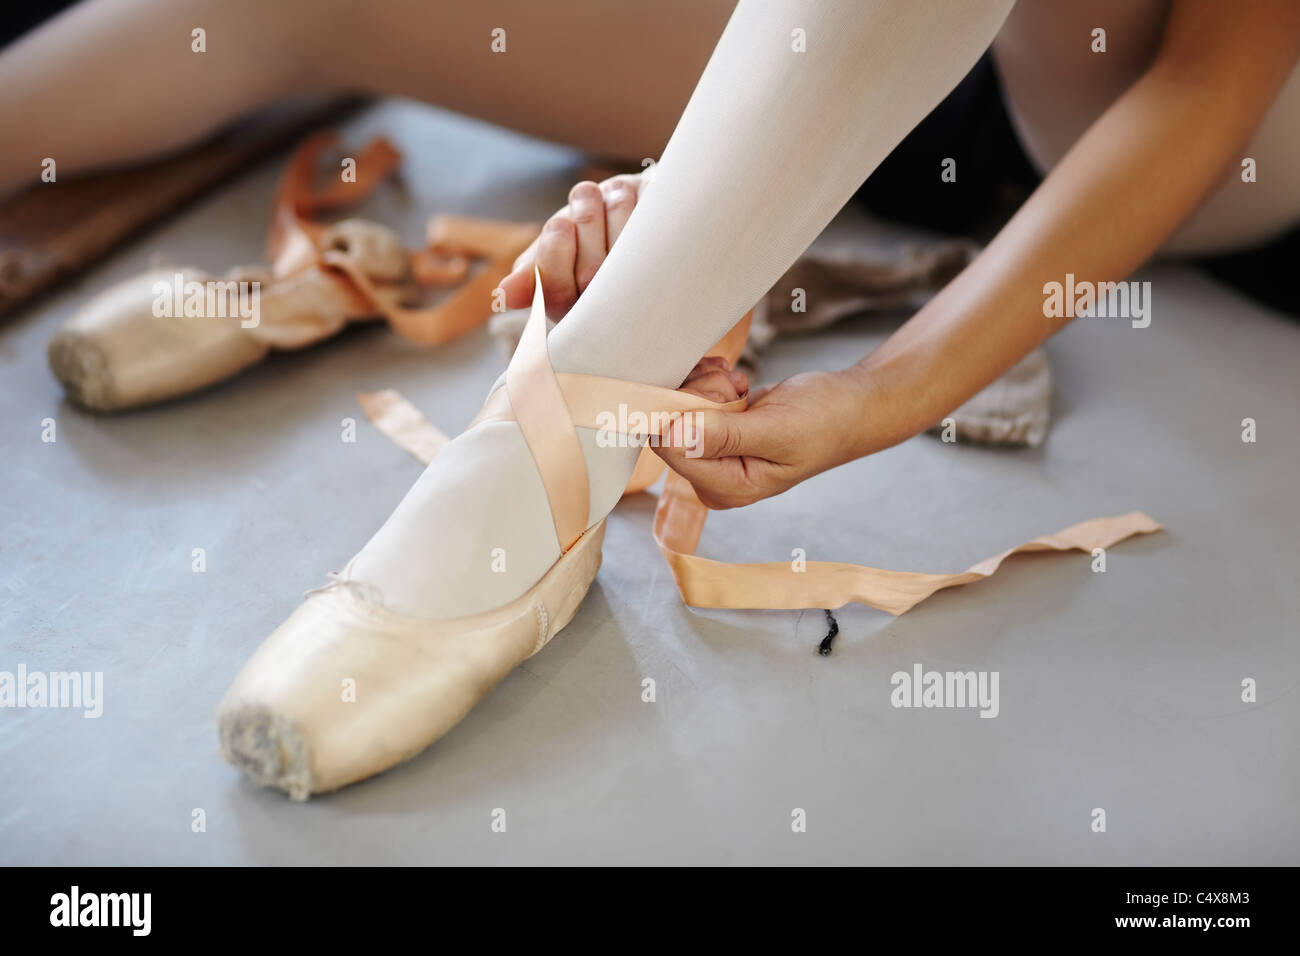 Female ballet dancer adjusting laces on her shoes Stock Photo